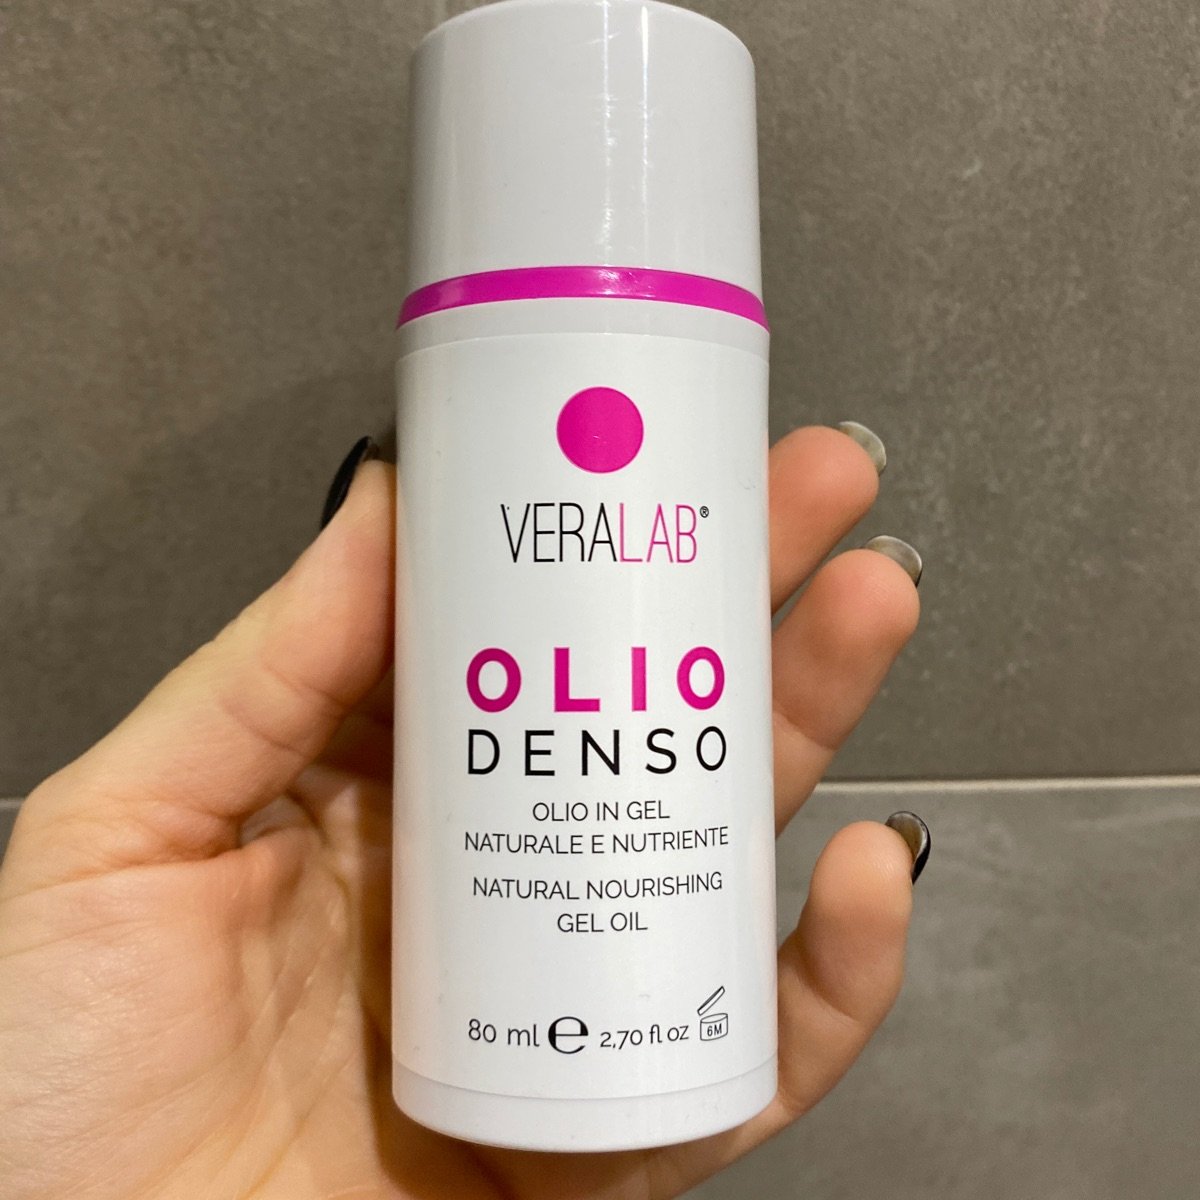 Veralab Olio denso Reviews | abillion